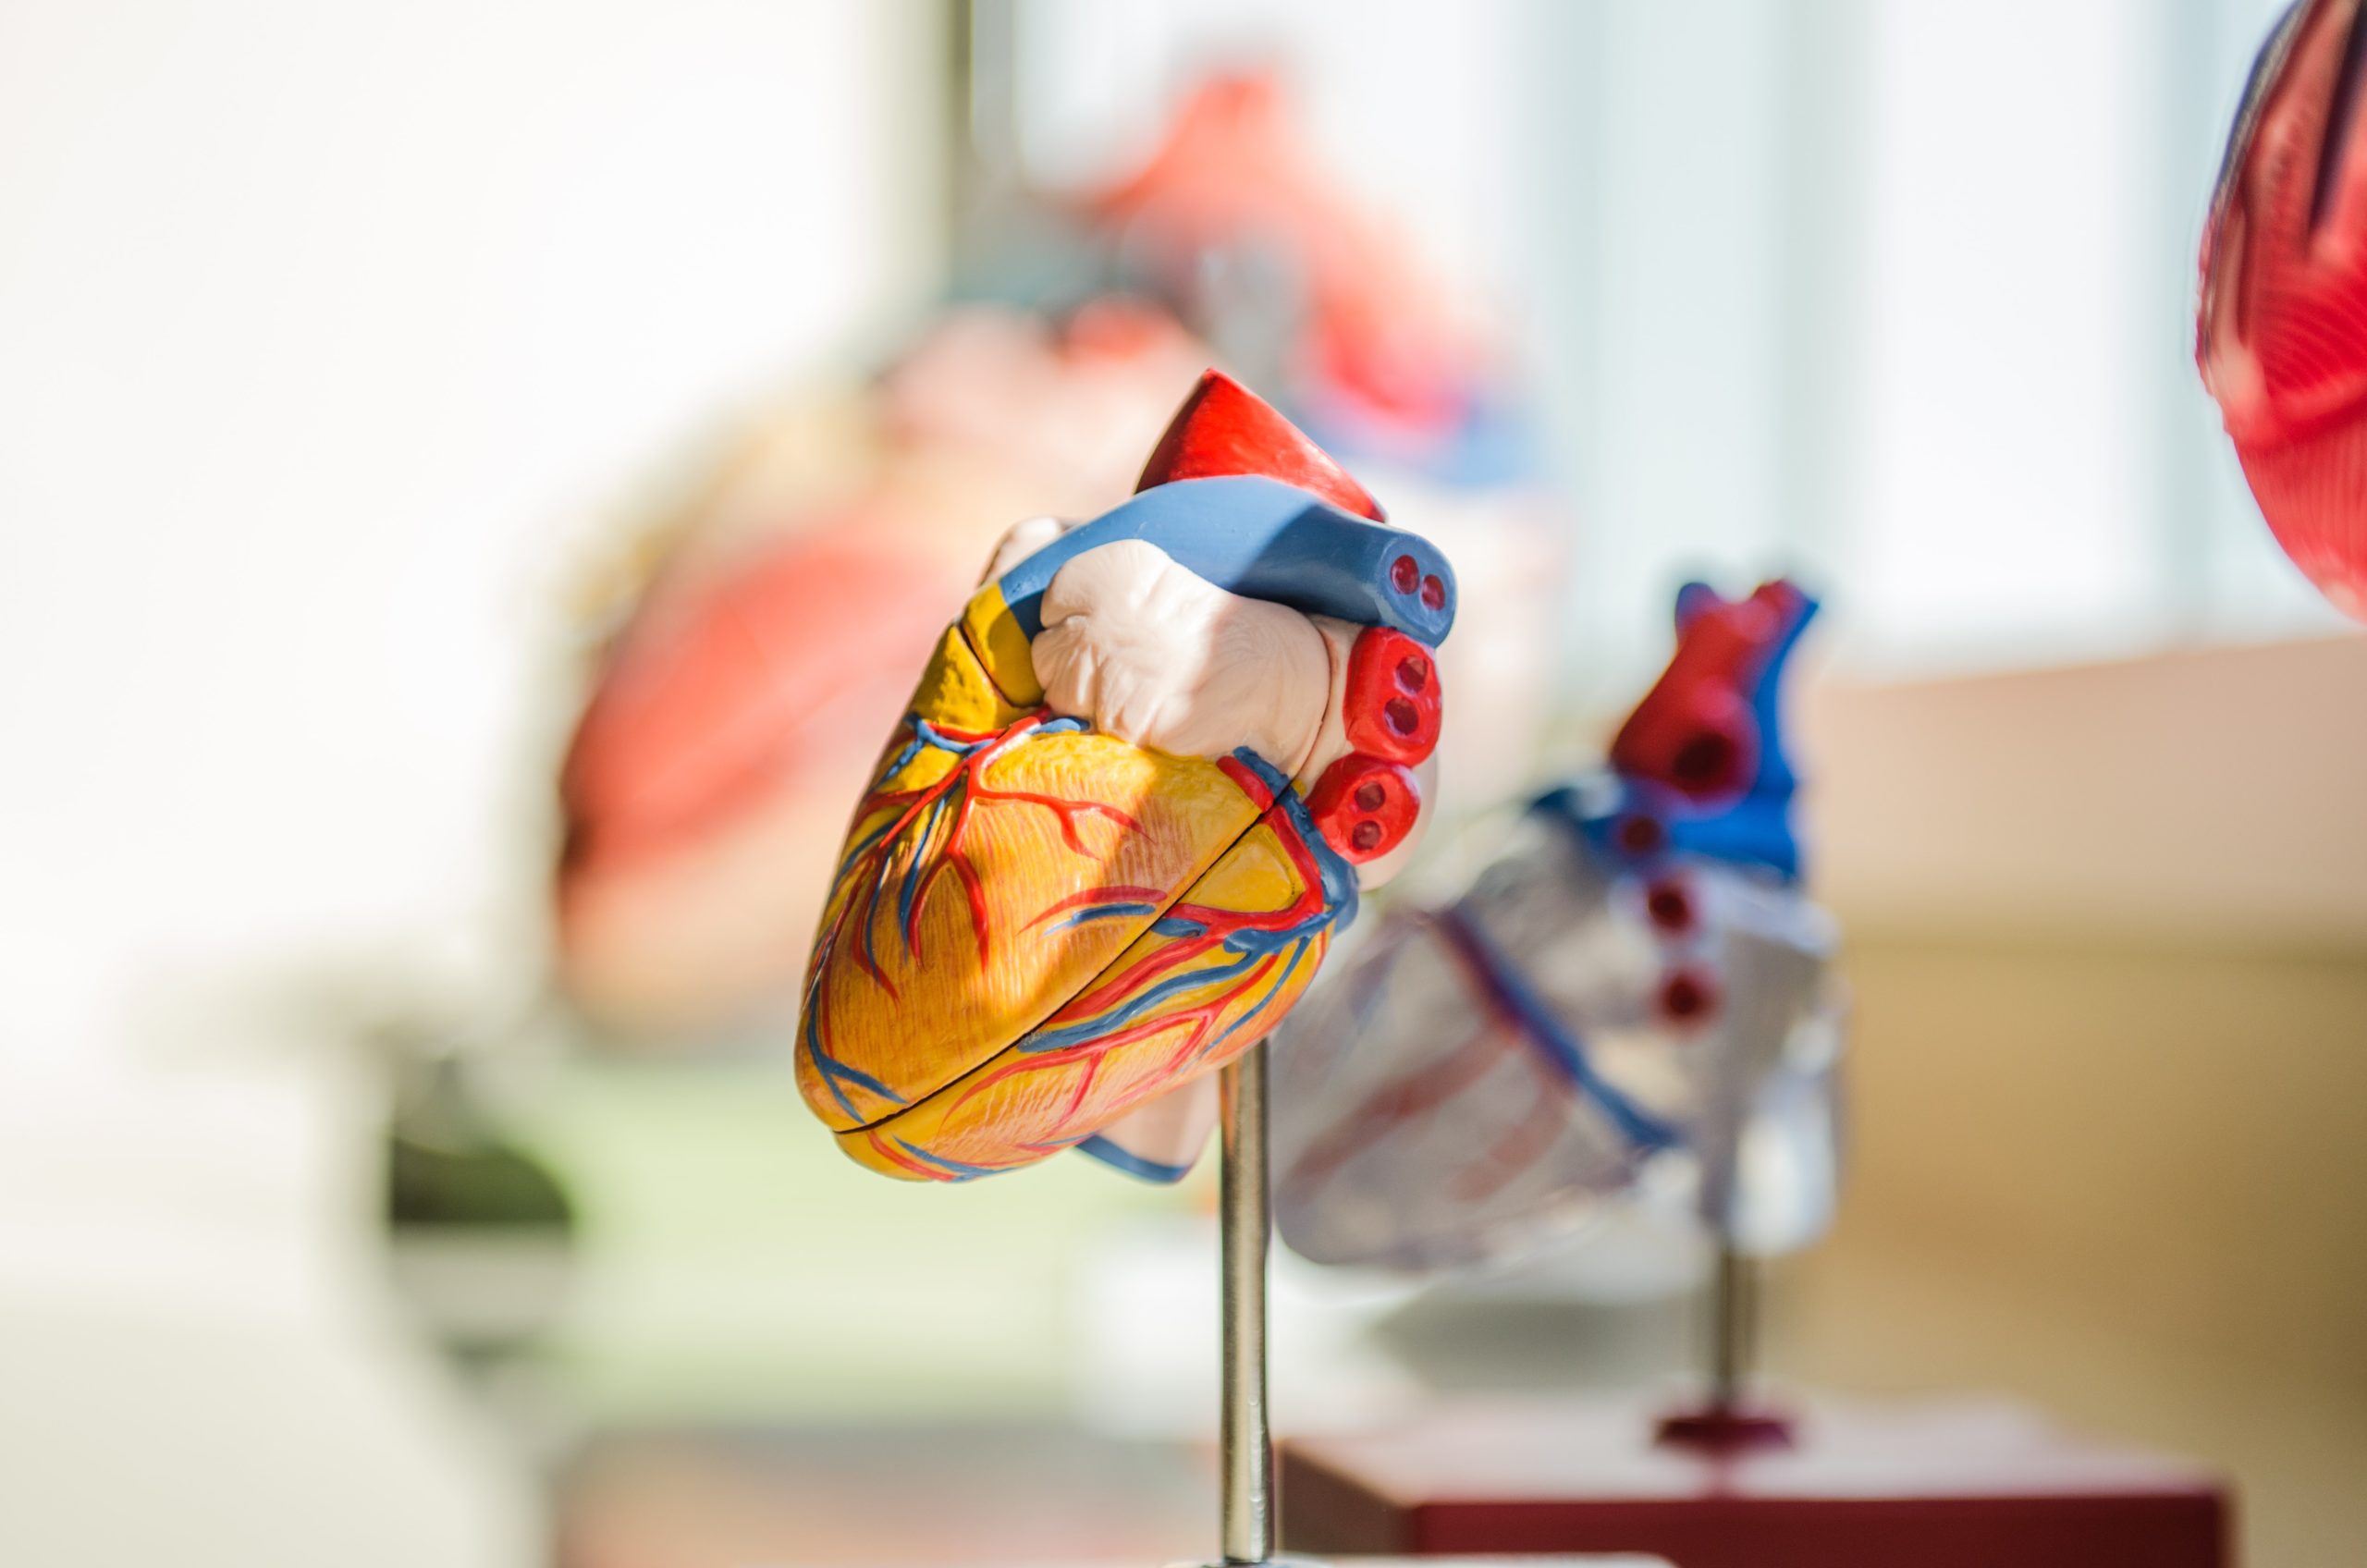 Anatomic model of heart